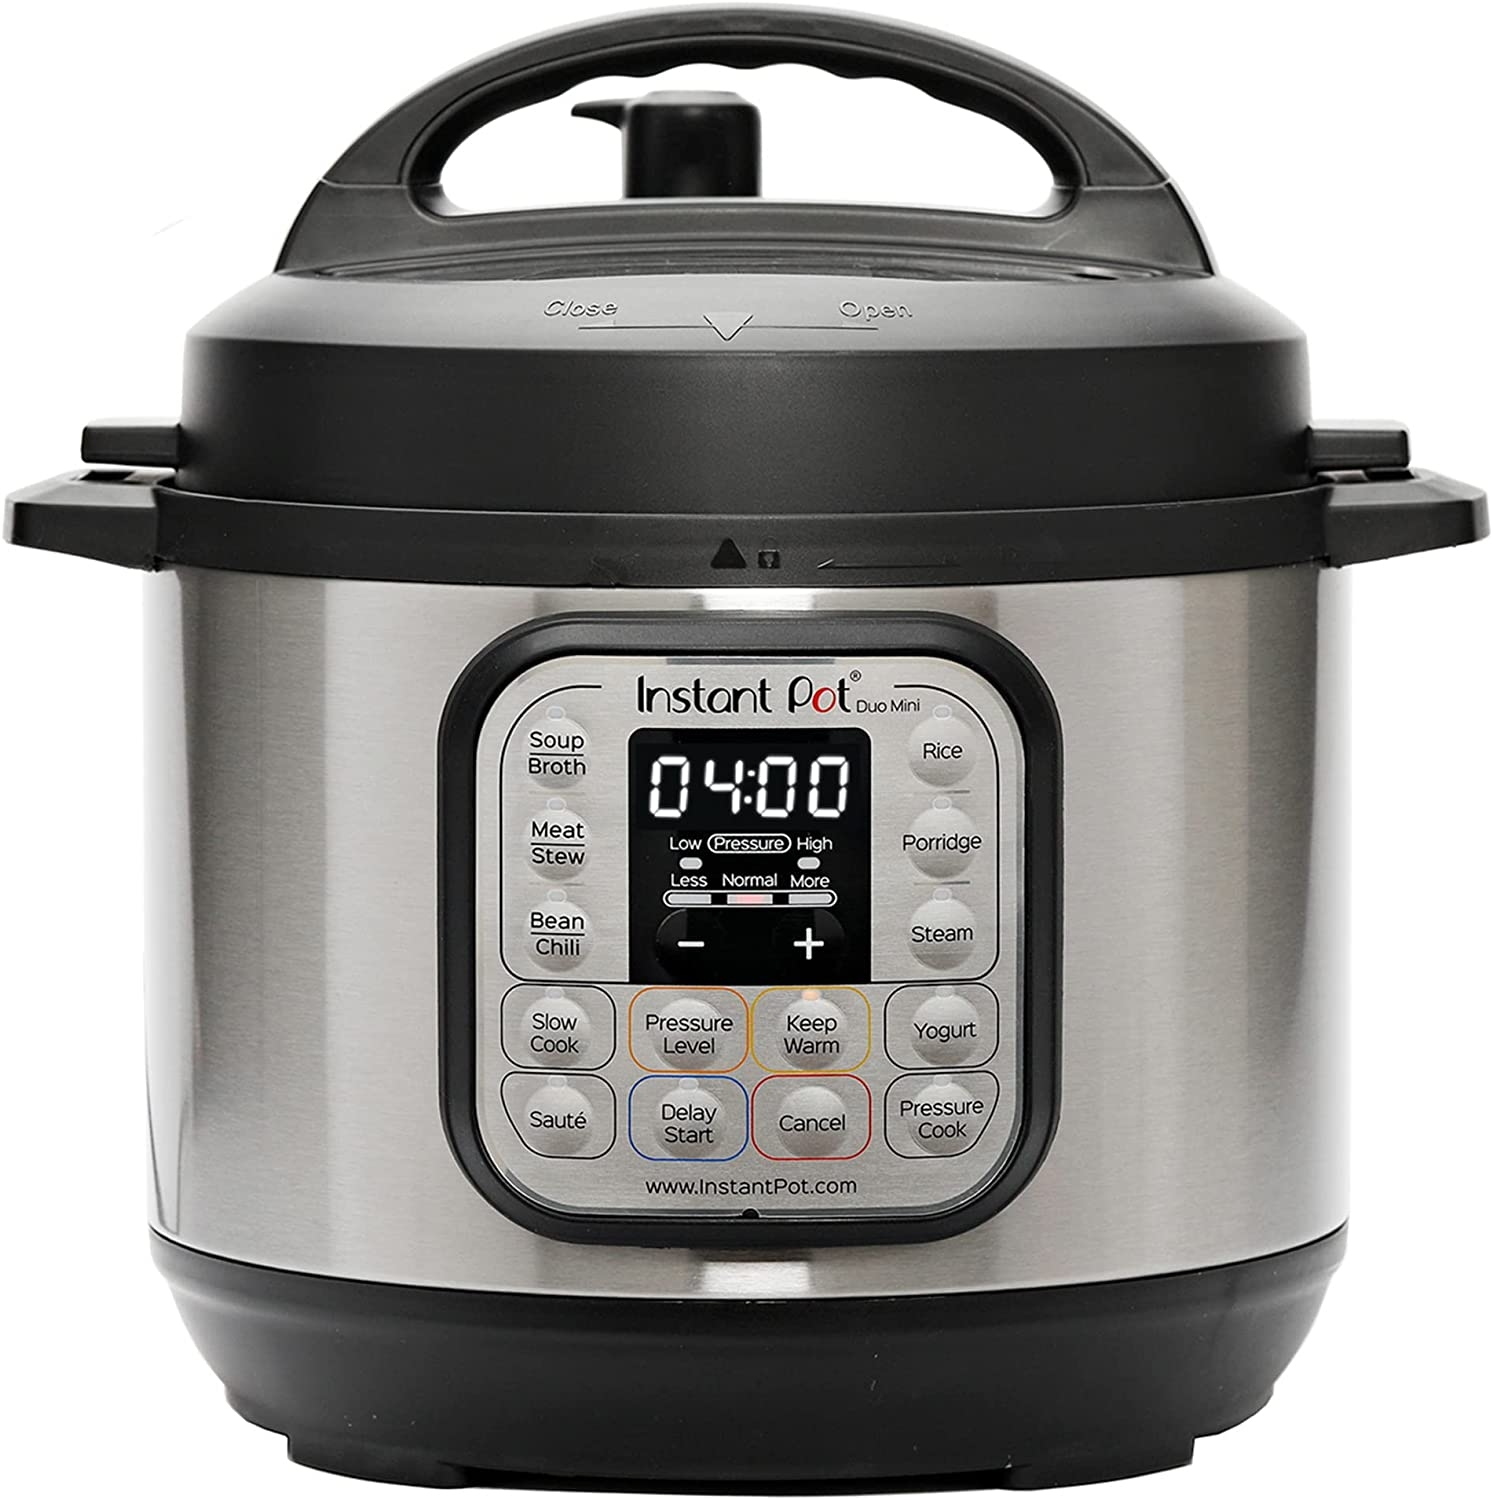 Instant Pot Duo 7-in-1 Electric Pressure Cooker, Slow Cooker, Rice Cooker, Steamer, Sauté, Yogurt Maker, Warmer & Sterilizer,